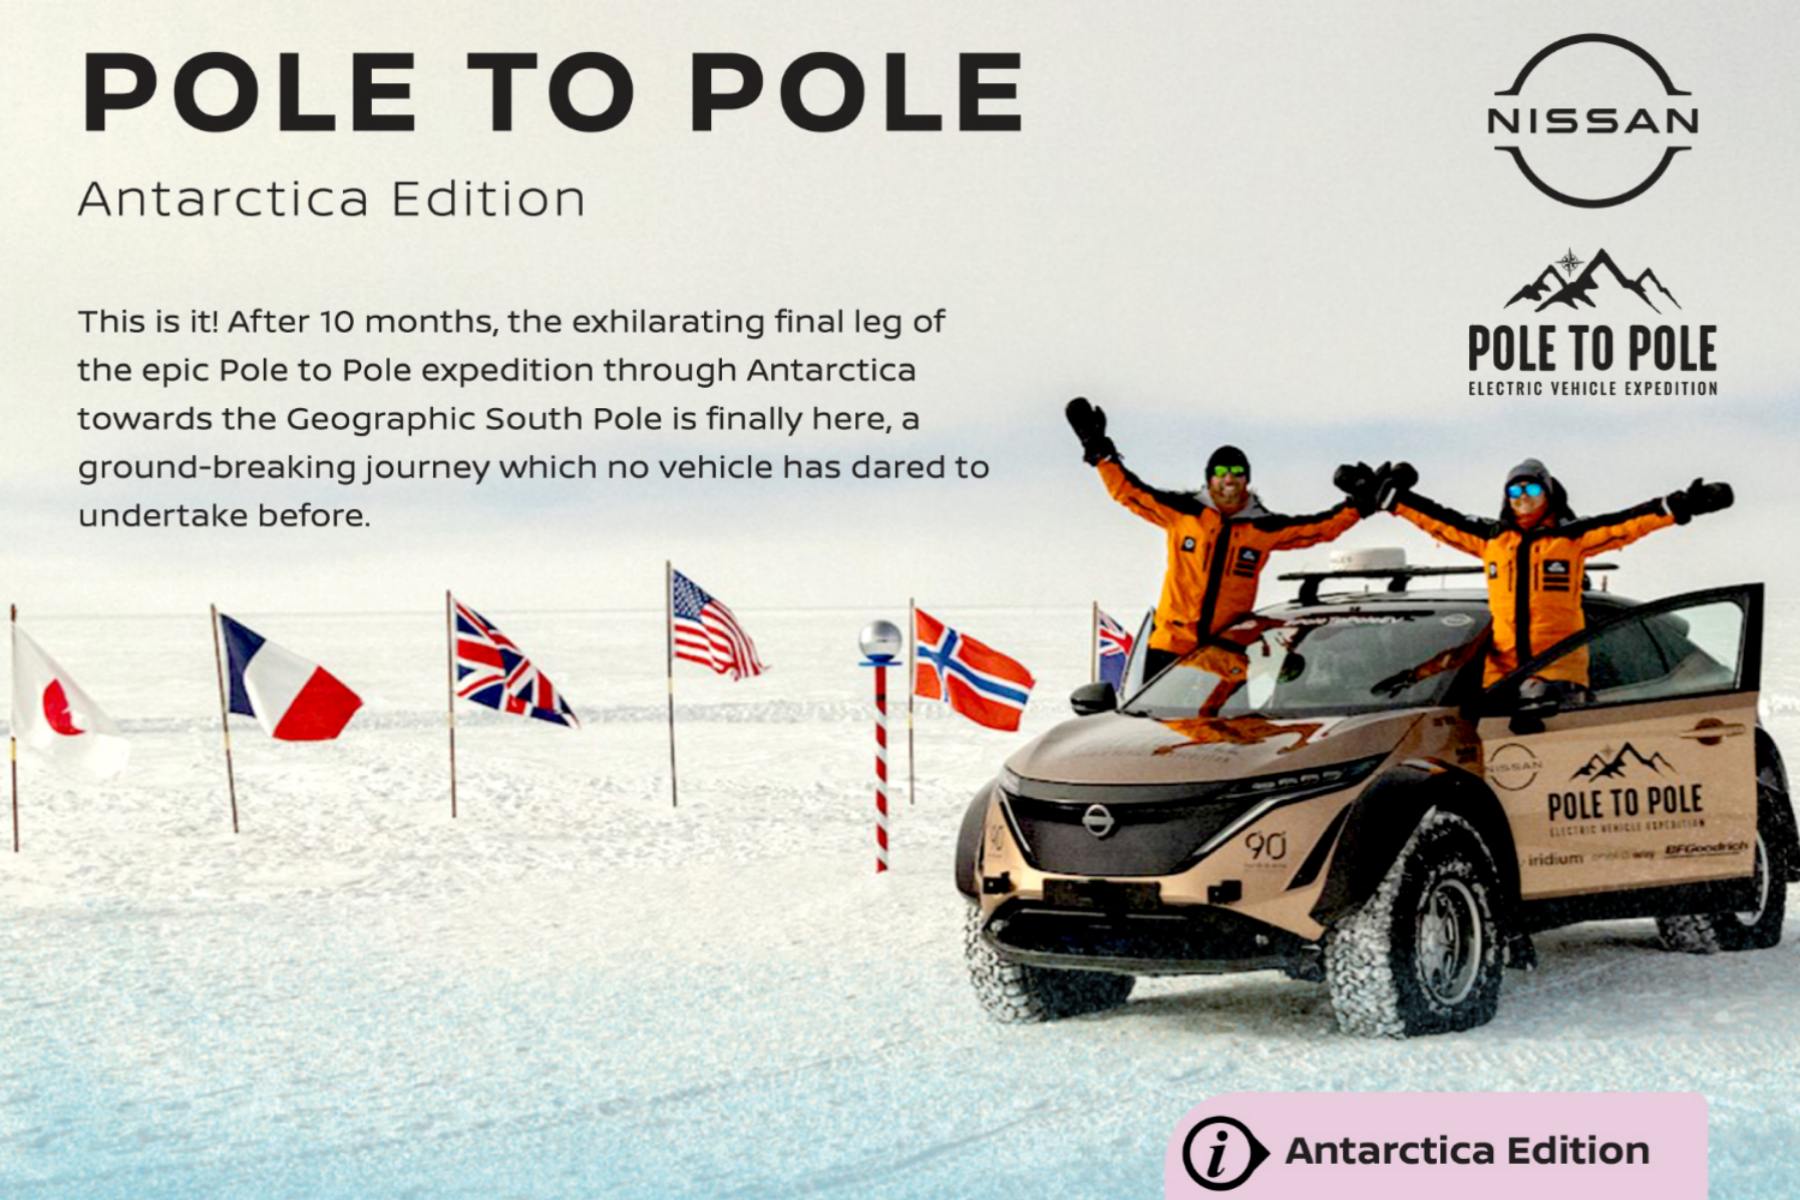 Nissan-Polo2Pole-Stage5 Antarctic-ARTWORK